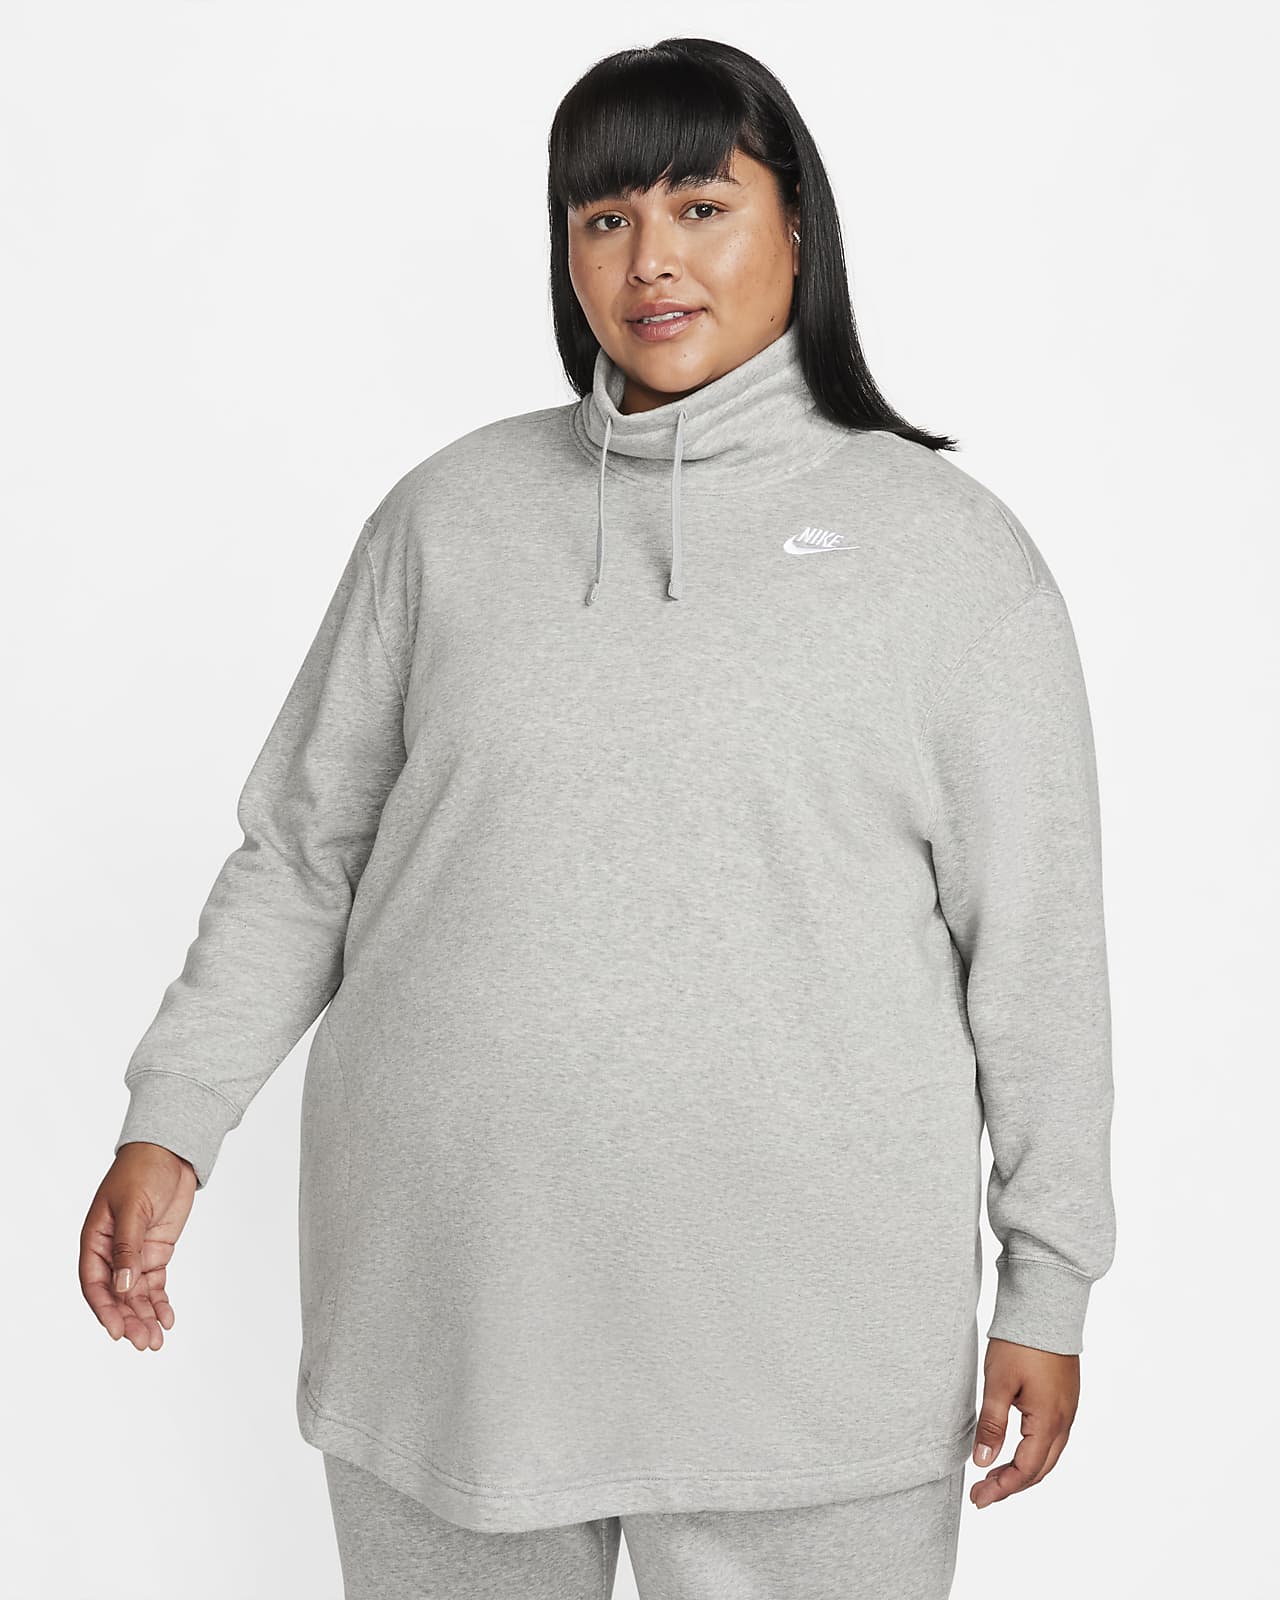 Sudadera de cuello alto oversized para mujer (talla grande) Nike Sportswear Club Fleece